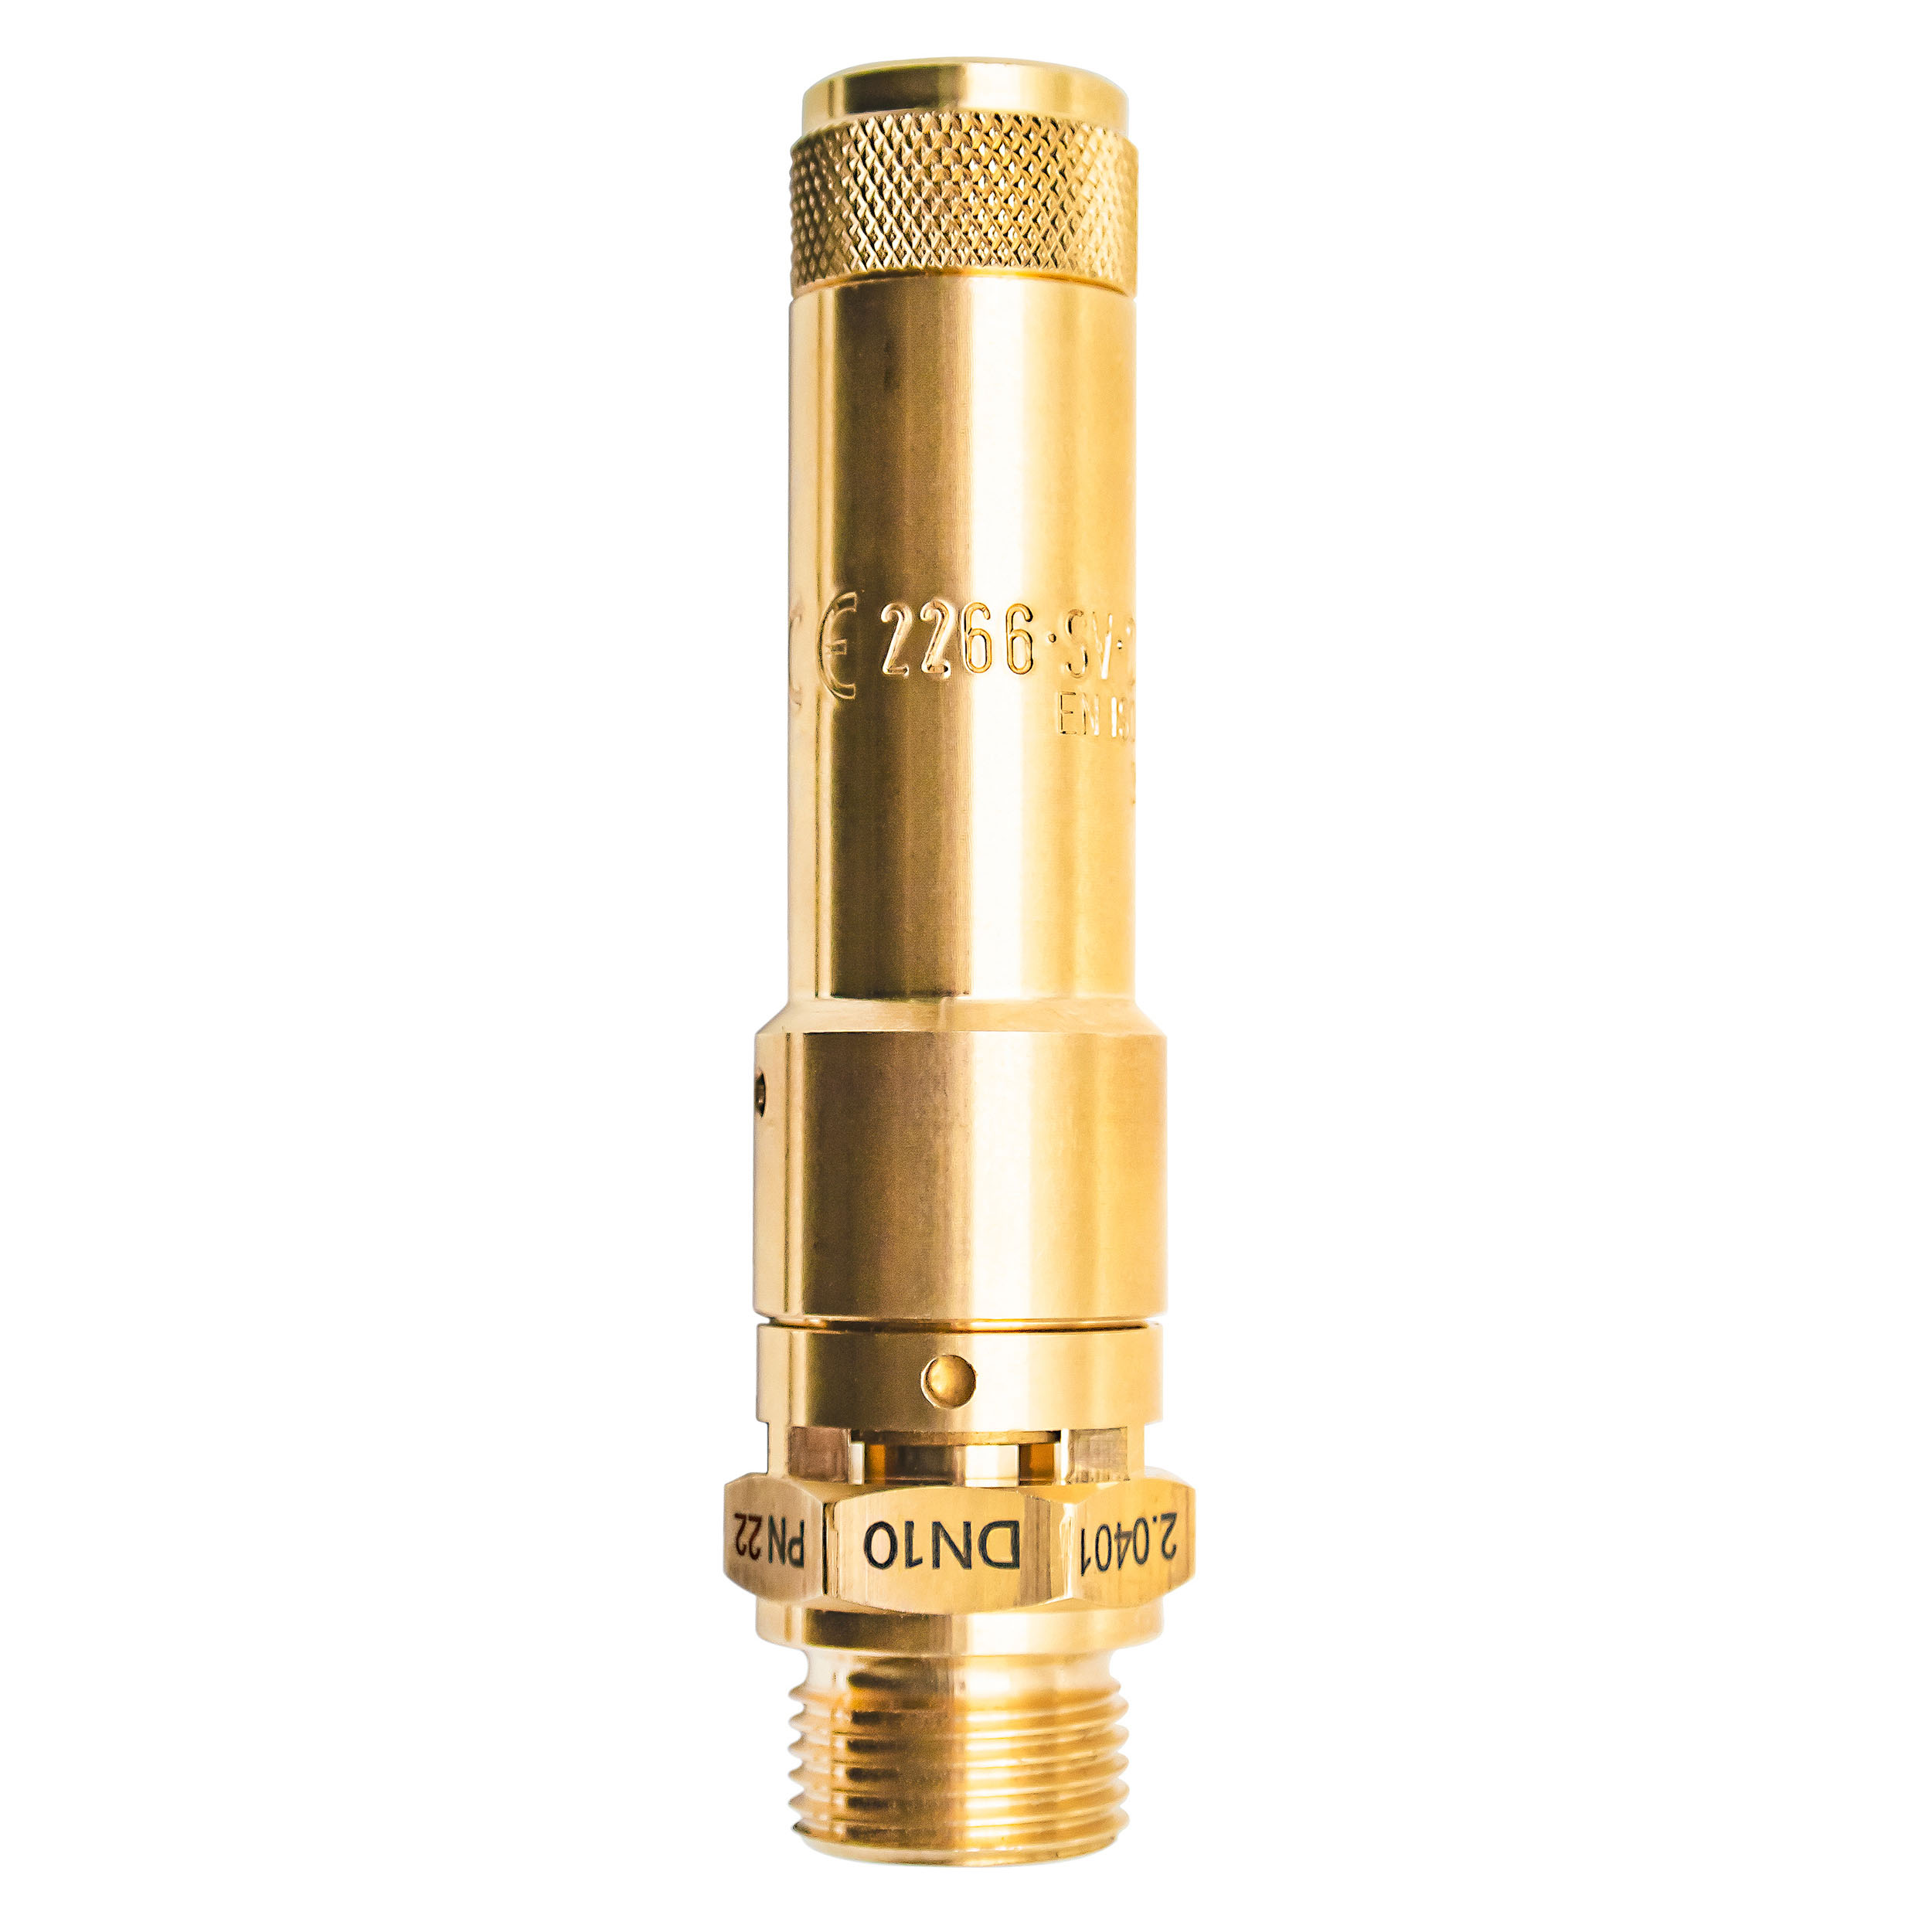 Savety valve component tested DN 10, G½, set pressure: 9.4 bar (136,3 psi)